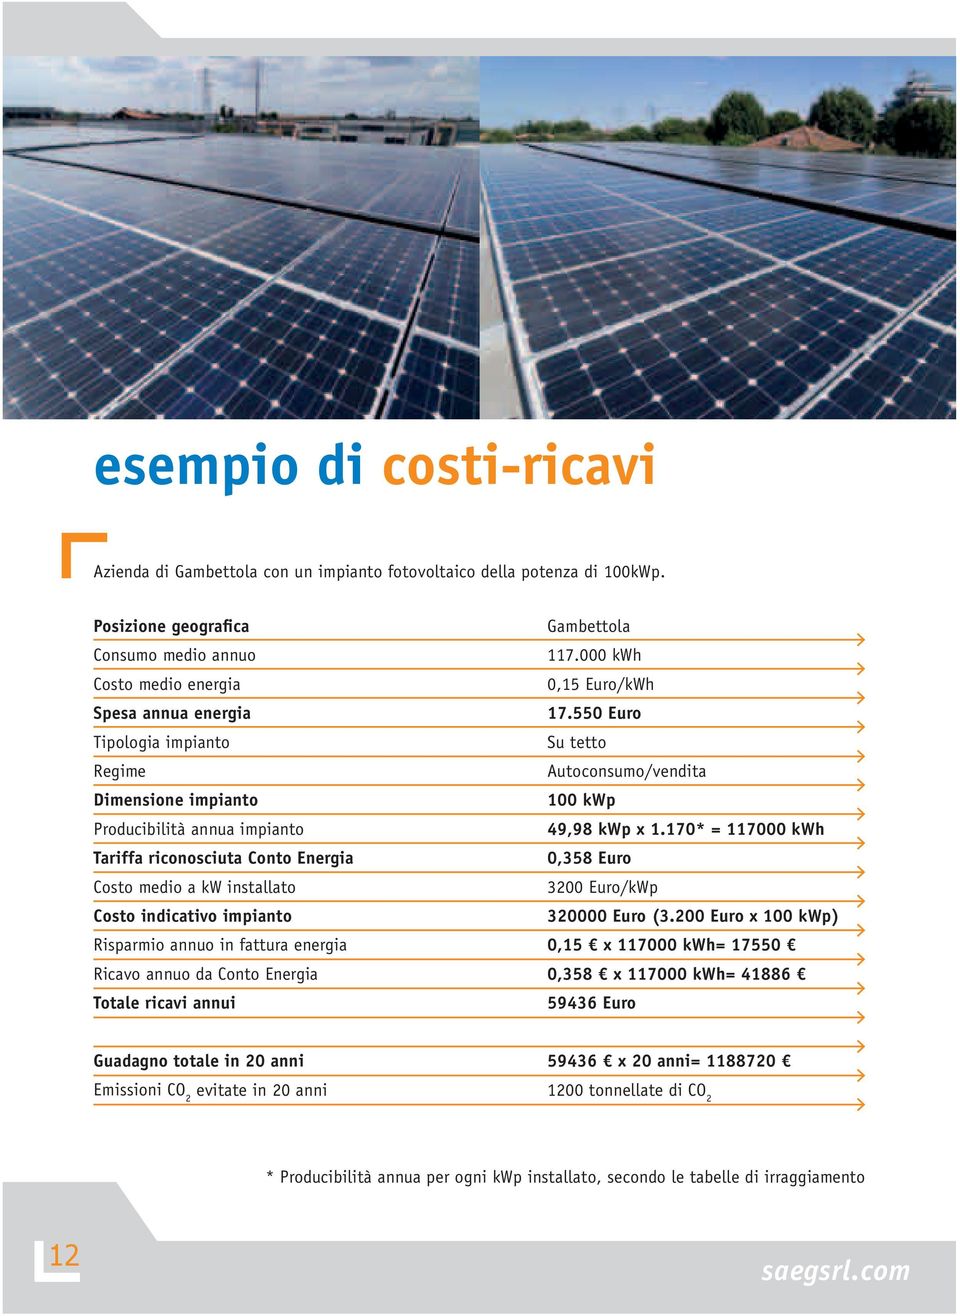 170* = 117000 kwh Tariffa riconosciuta Conto Energia 0,358 Euro Costo medio a kw installato 3200 Euro/kWp Costo indicativo impianto 320000 Euro (3.